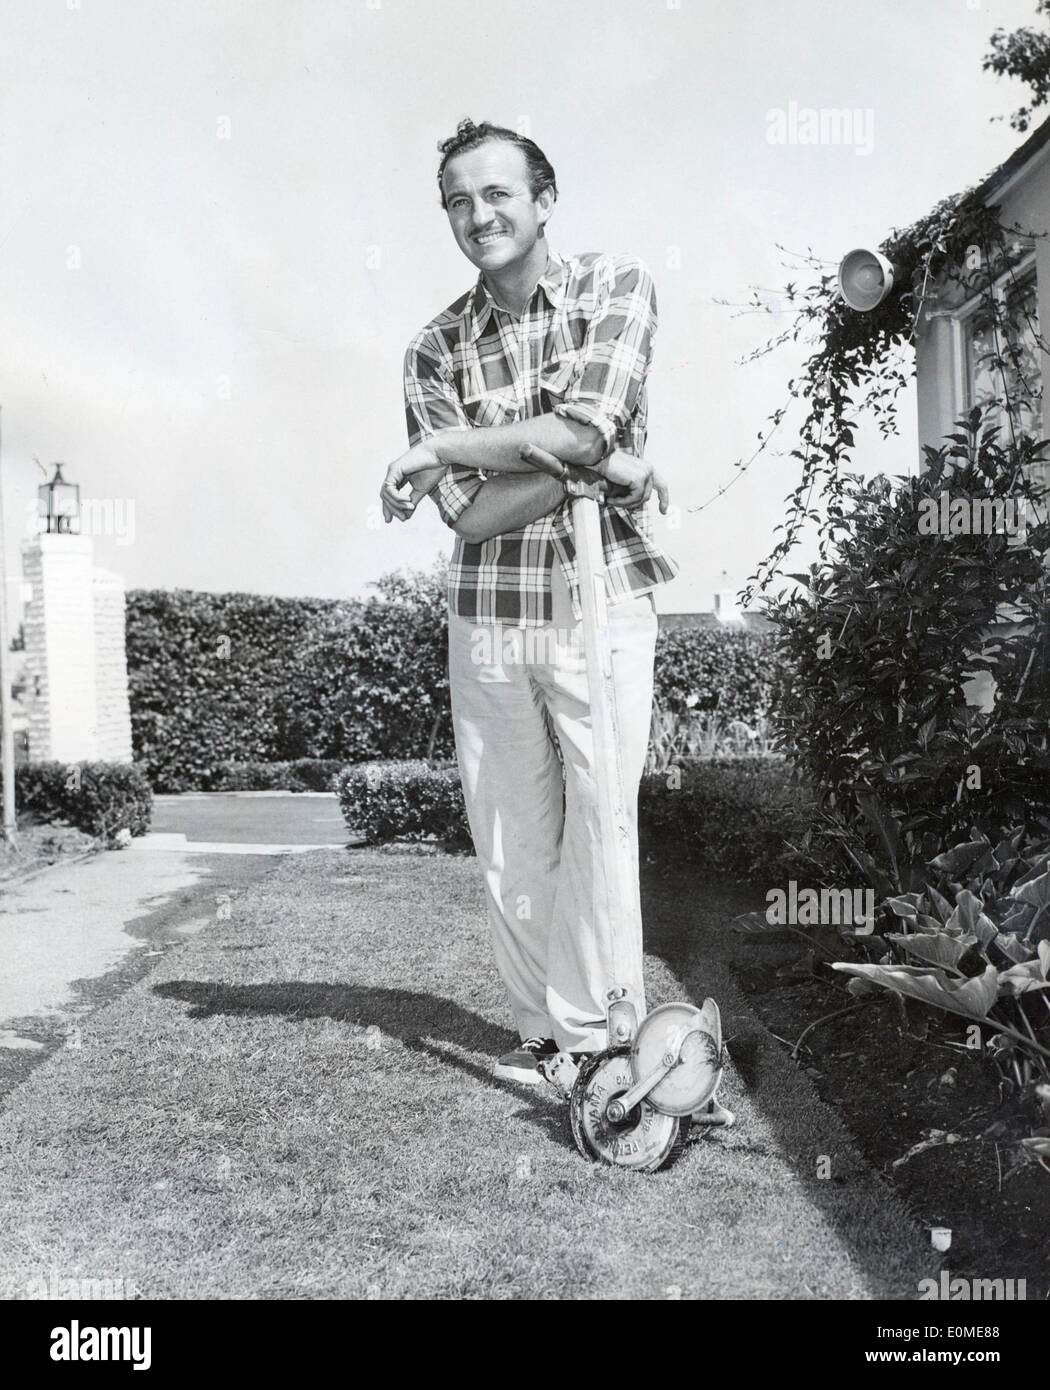 Actor David Niven in his backyard Stock Photo